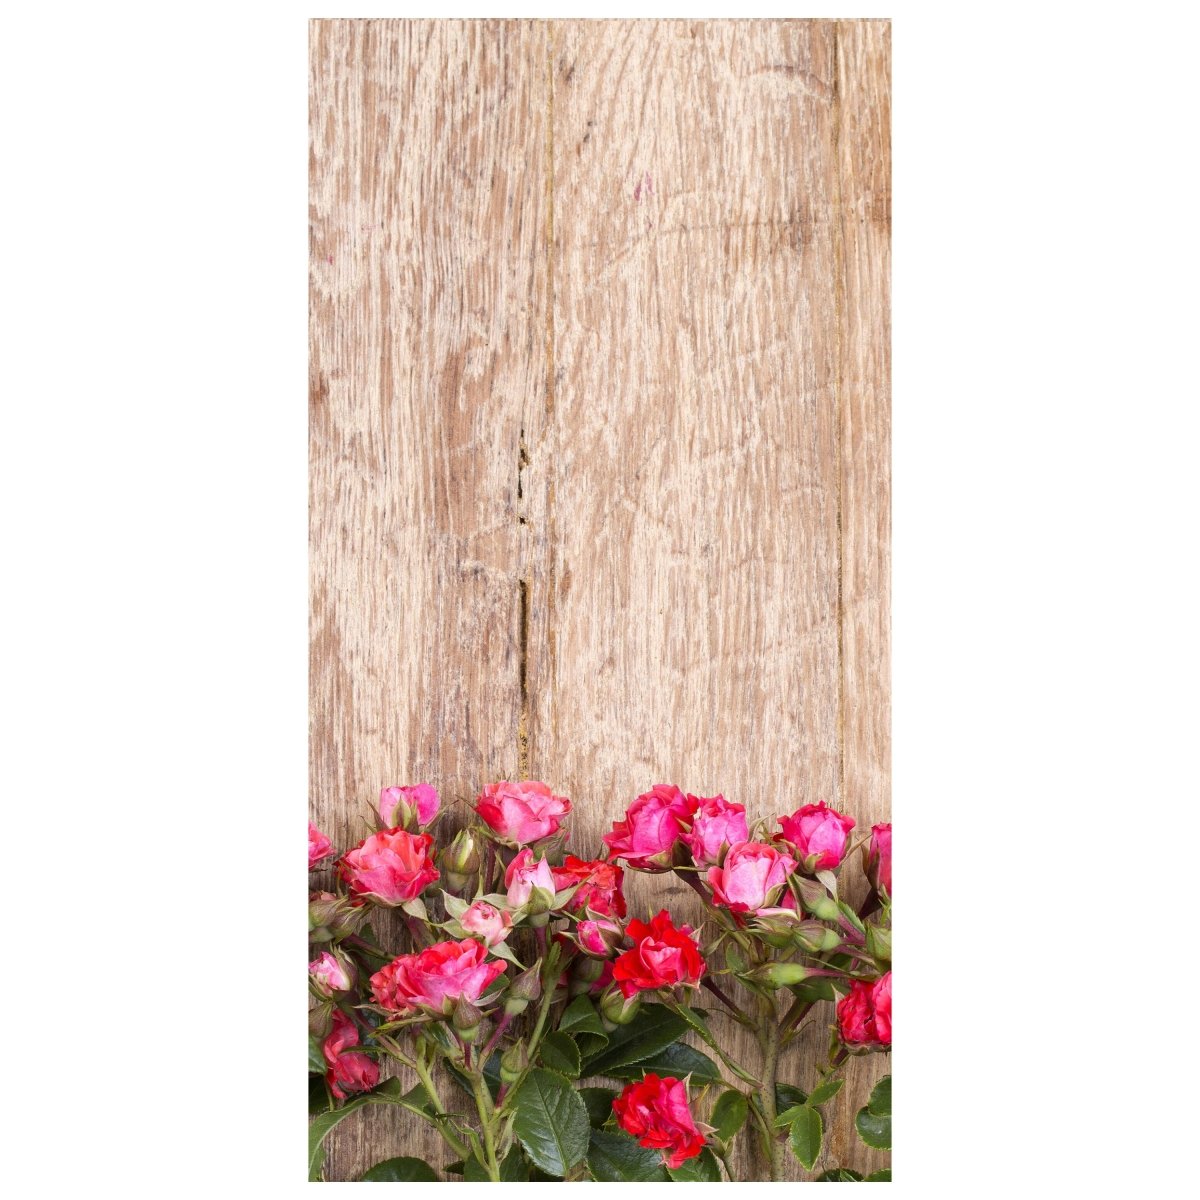 Türtapete Rote Rosen auf Holzbrett M1025 - Bild 2